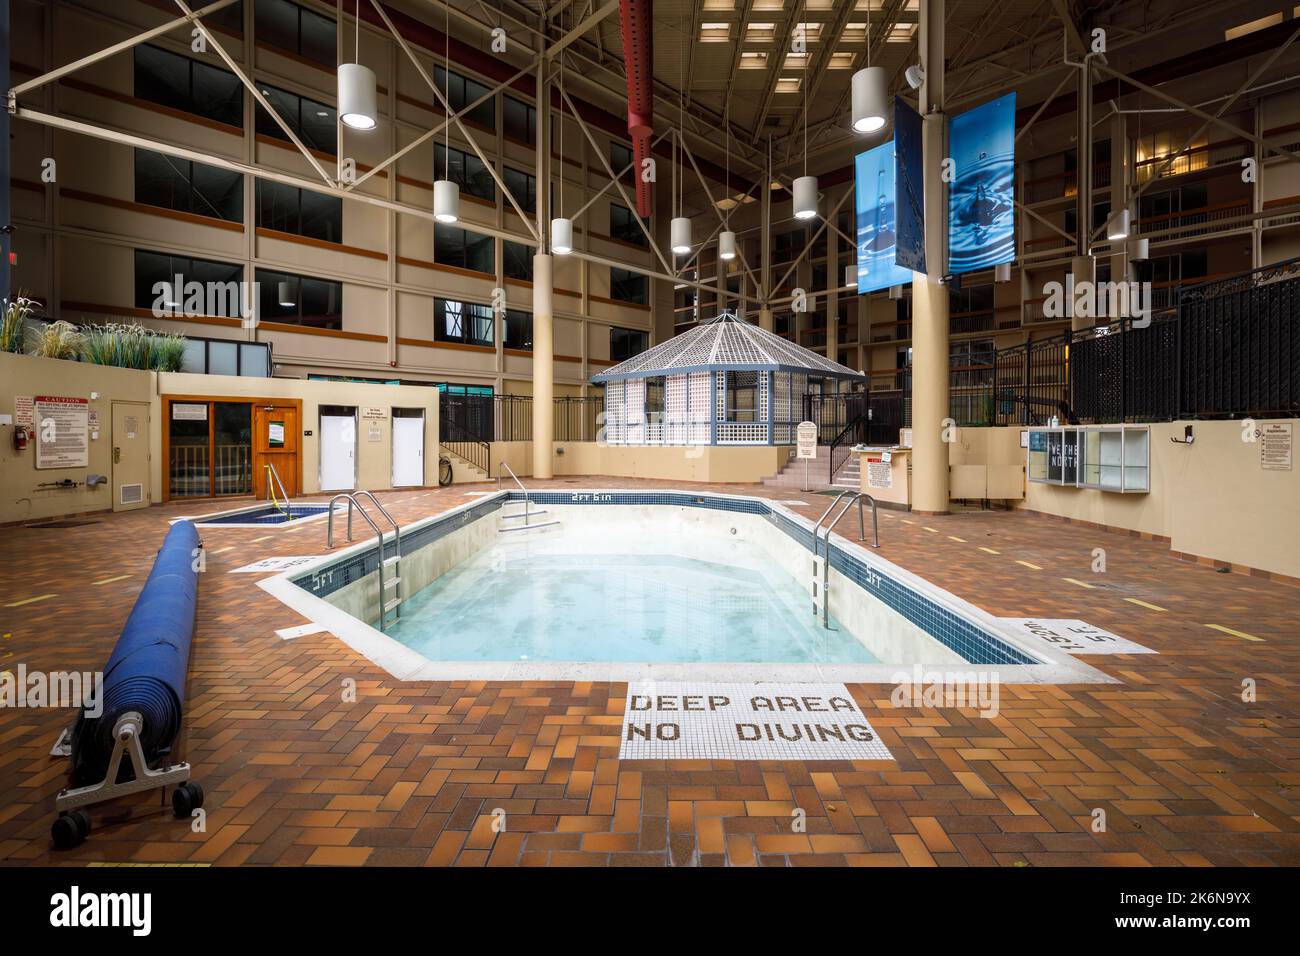 La piscina interna dell'hotel Holiday Inn Yorkdale, ora demolito, a Toronto, Ontario, Canada. Foto Stock